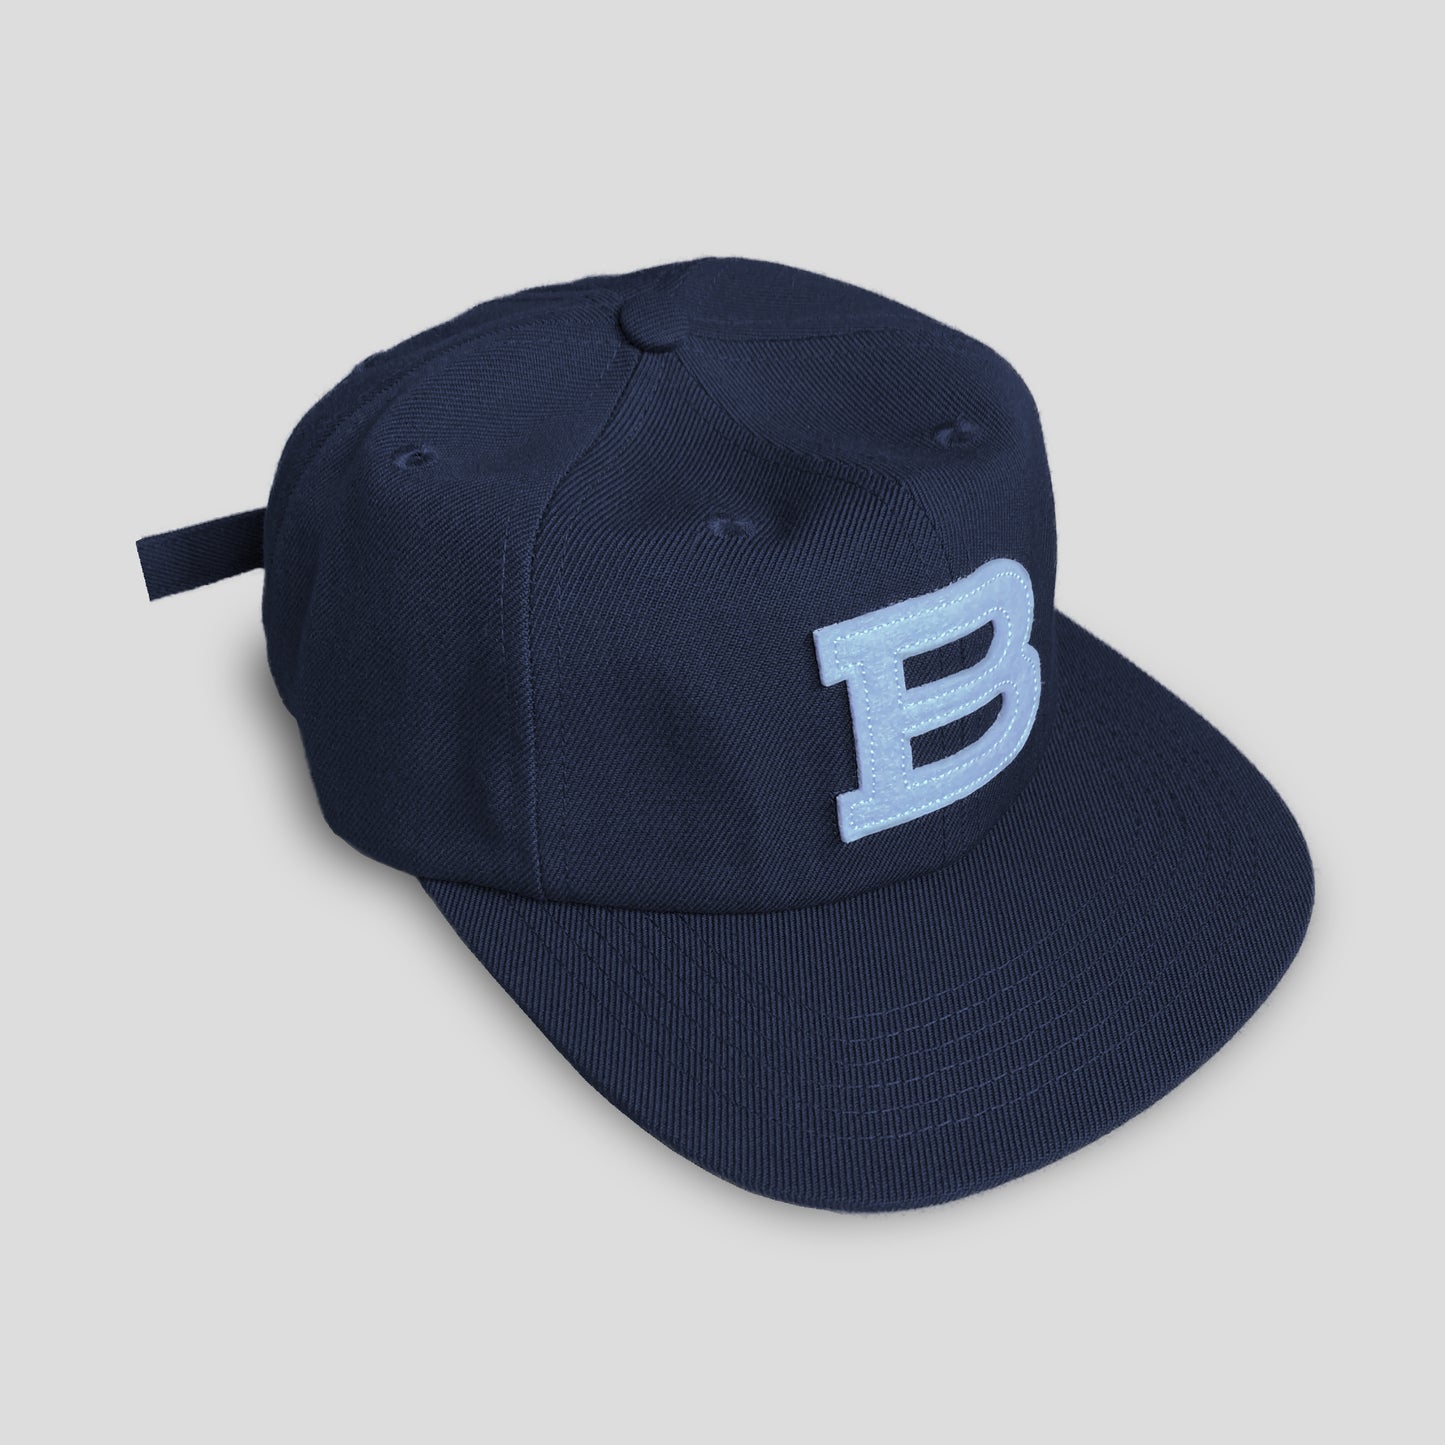 BLAST 'B' CAP